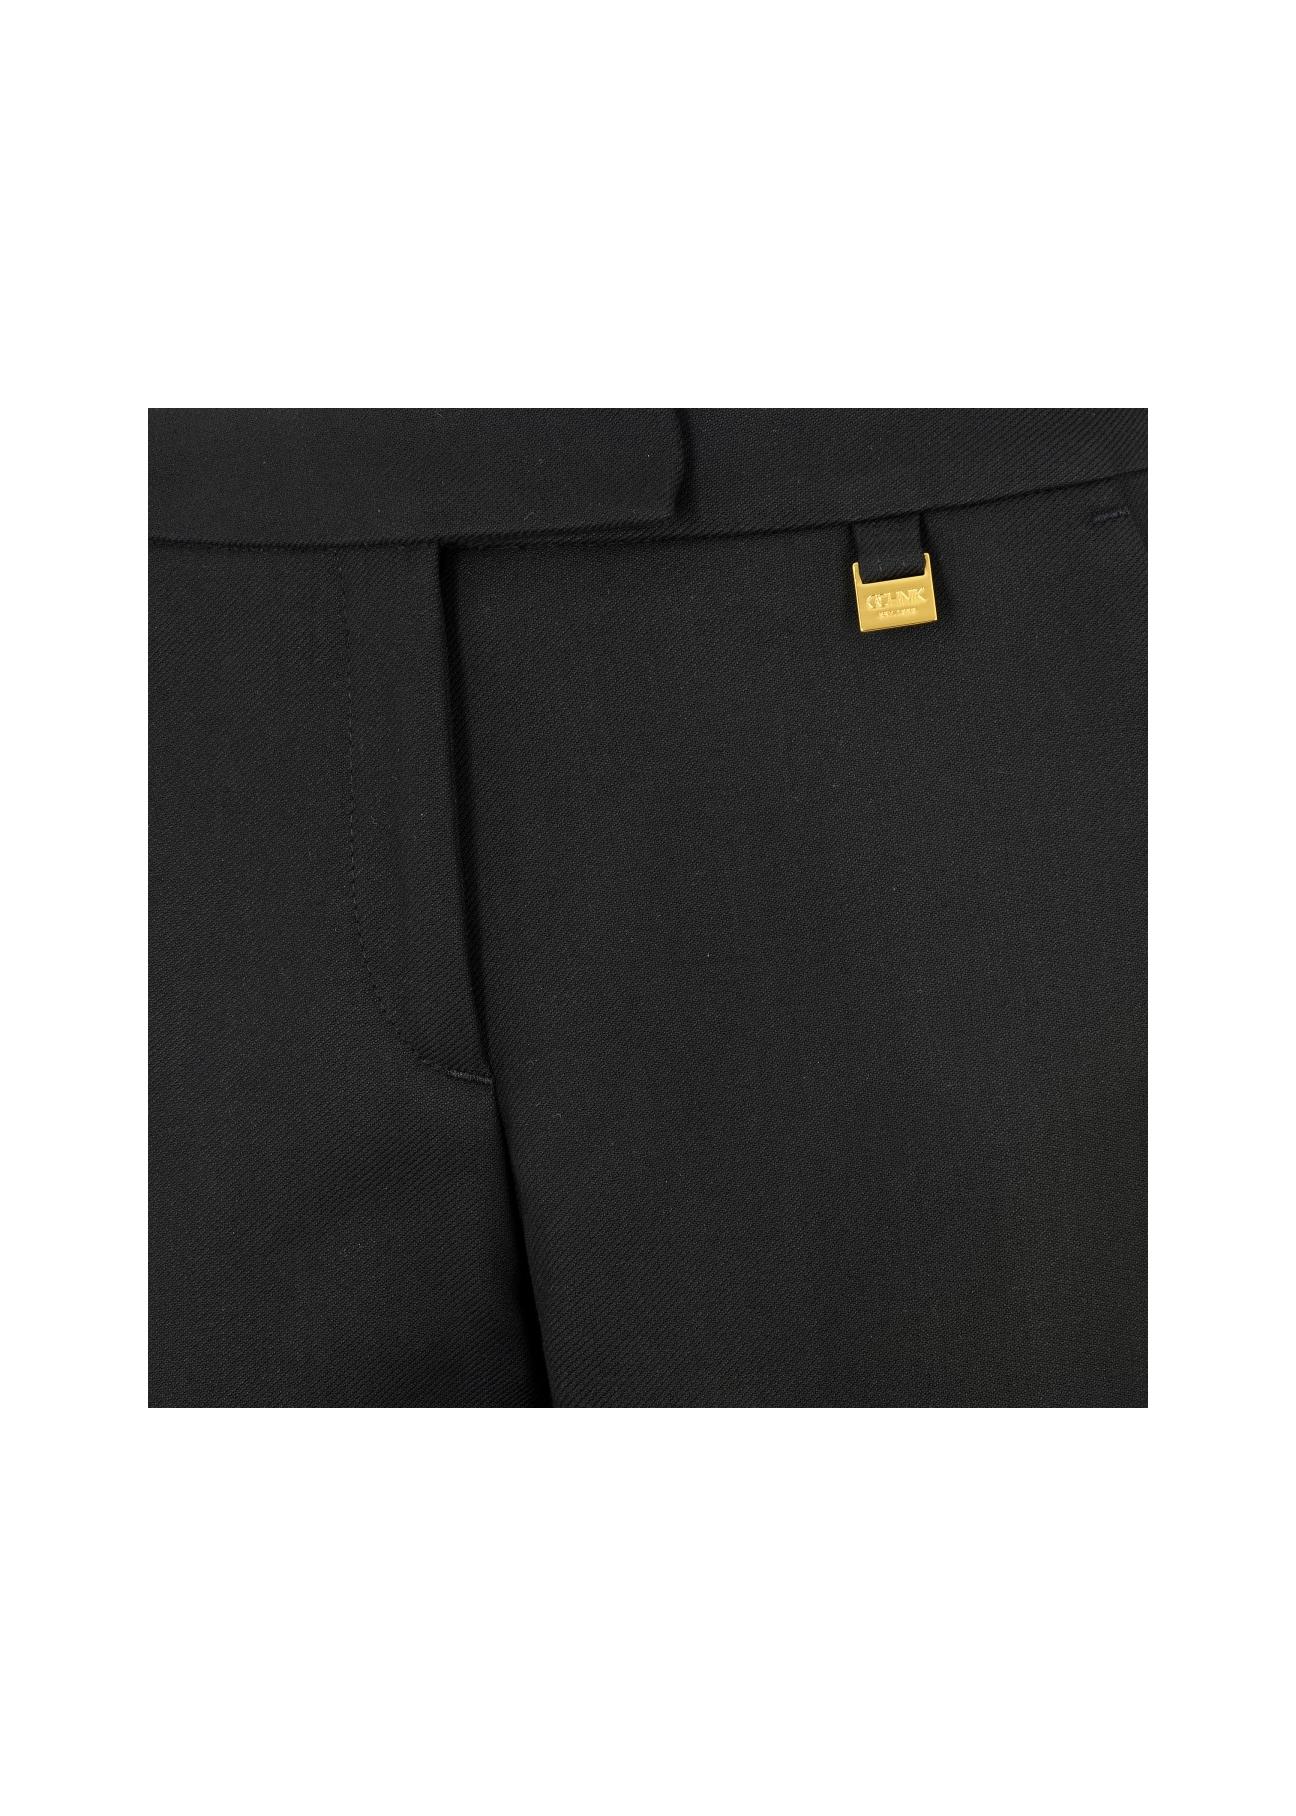 Spodnie damskie SPODT-0016-99(Z17)